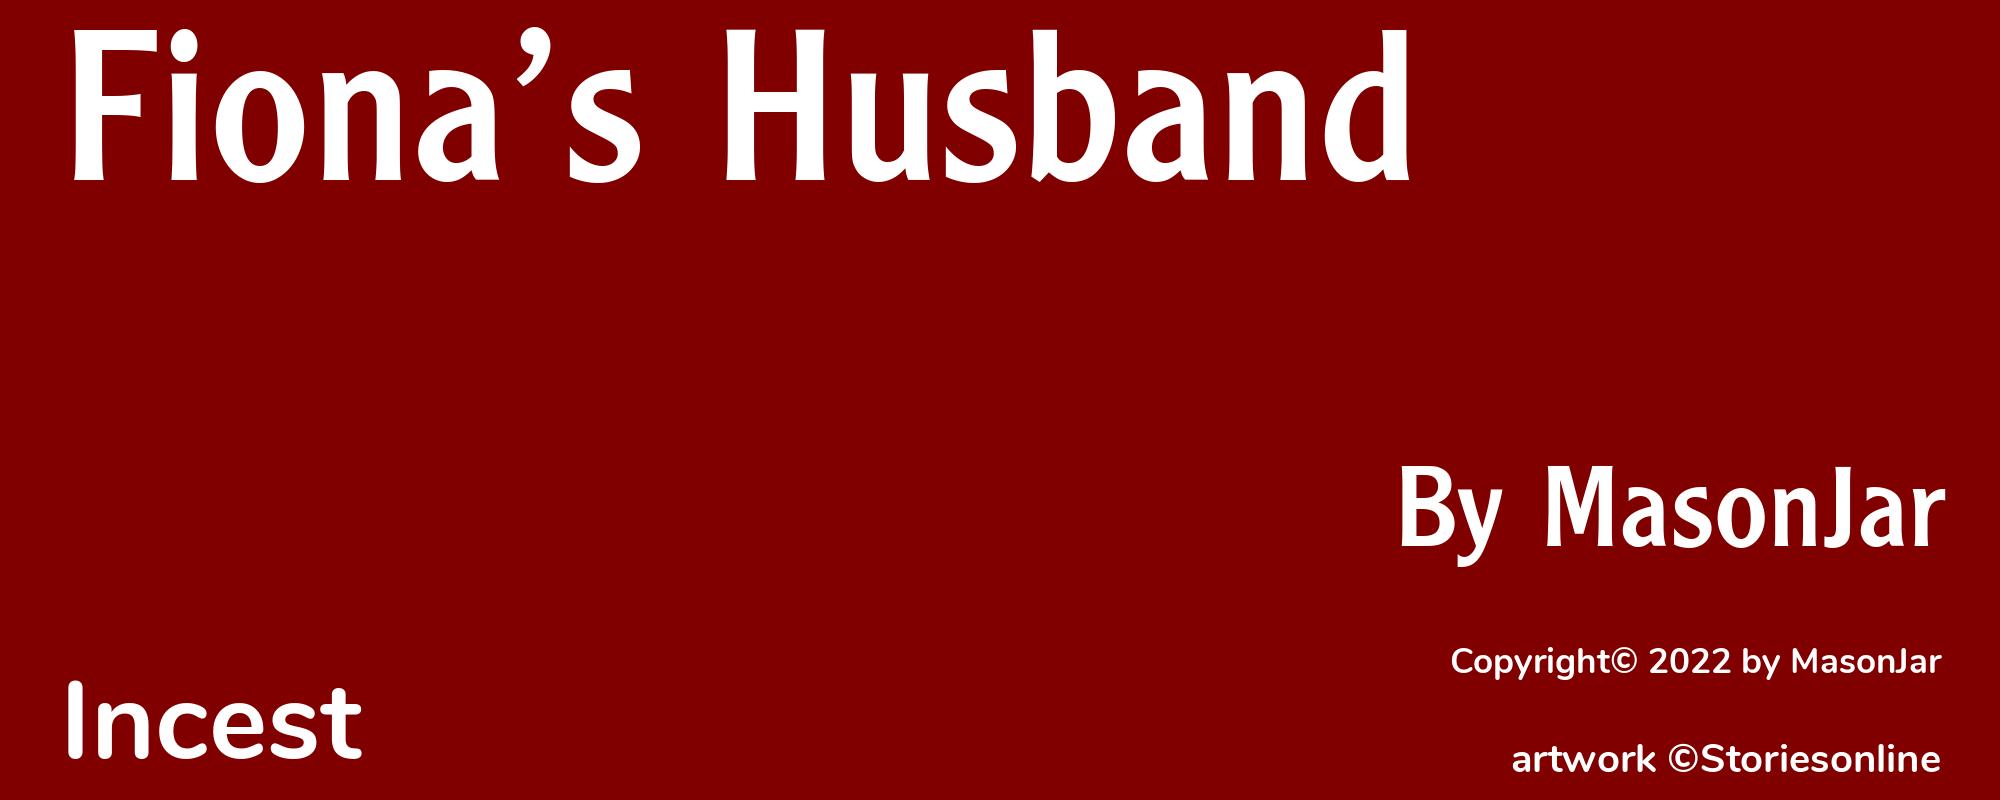 Fiona’s Husband - Cover